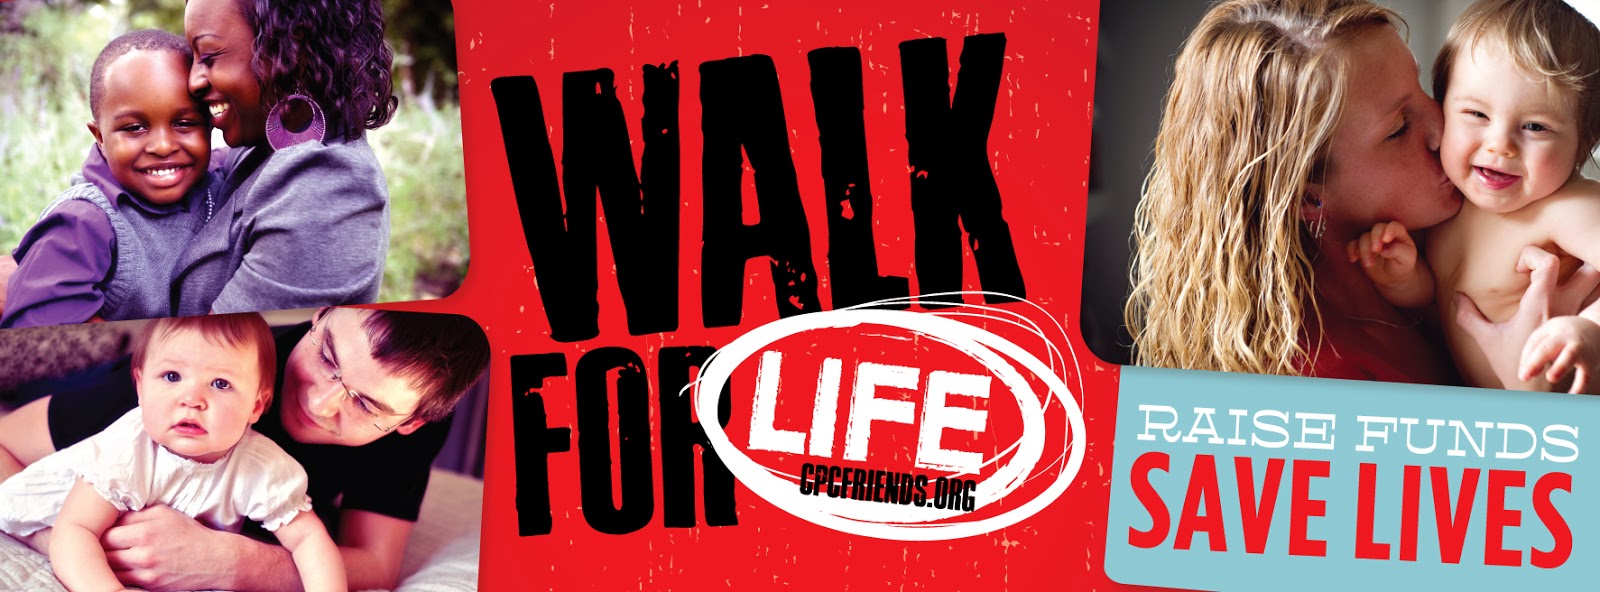 CPC's Walk for Life: www.cpcfriends.org/walk